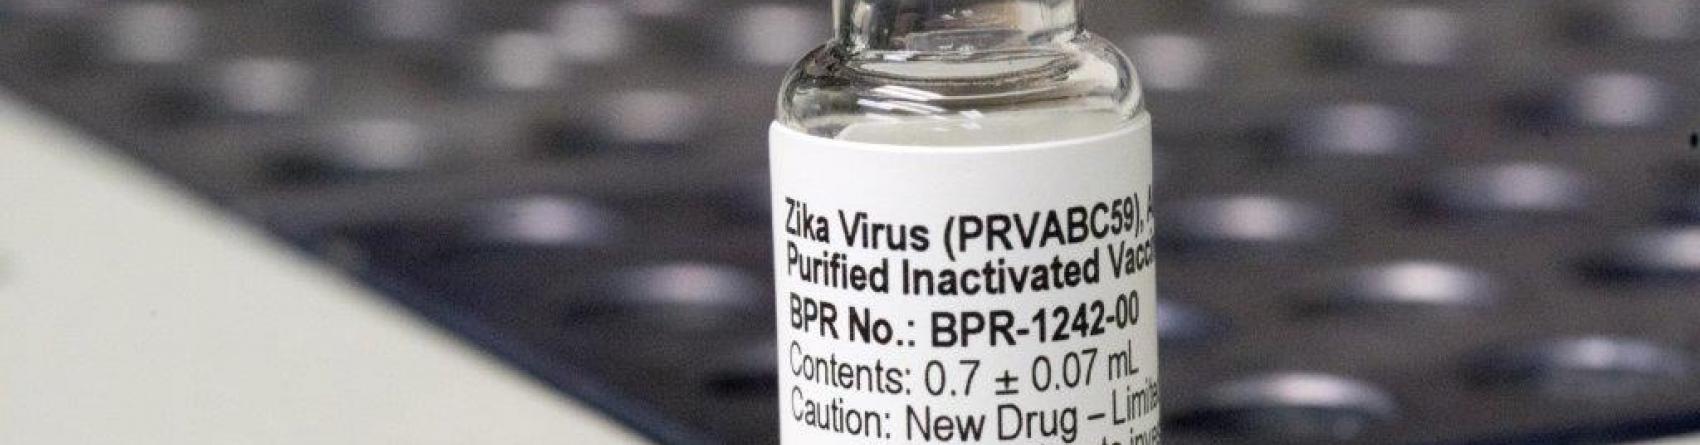 Zika vaccine vial close up